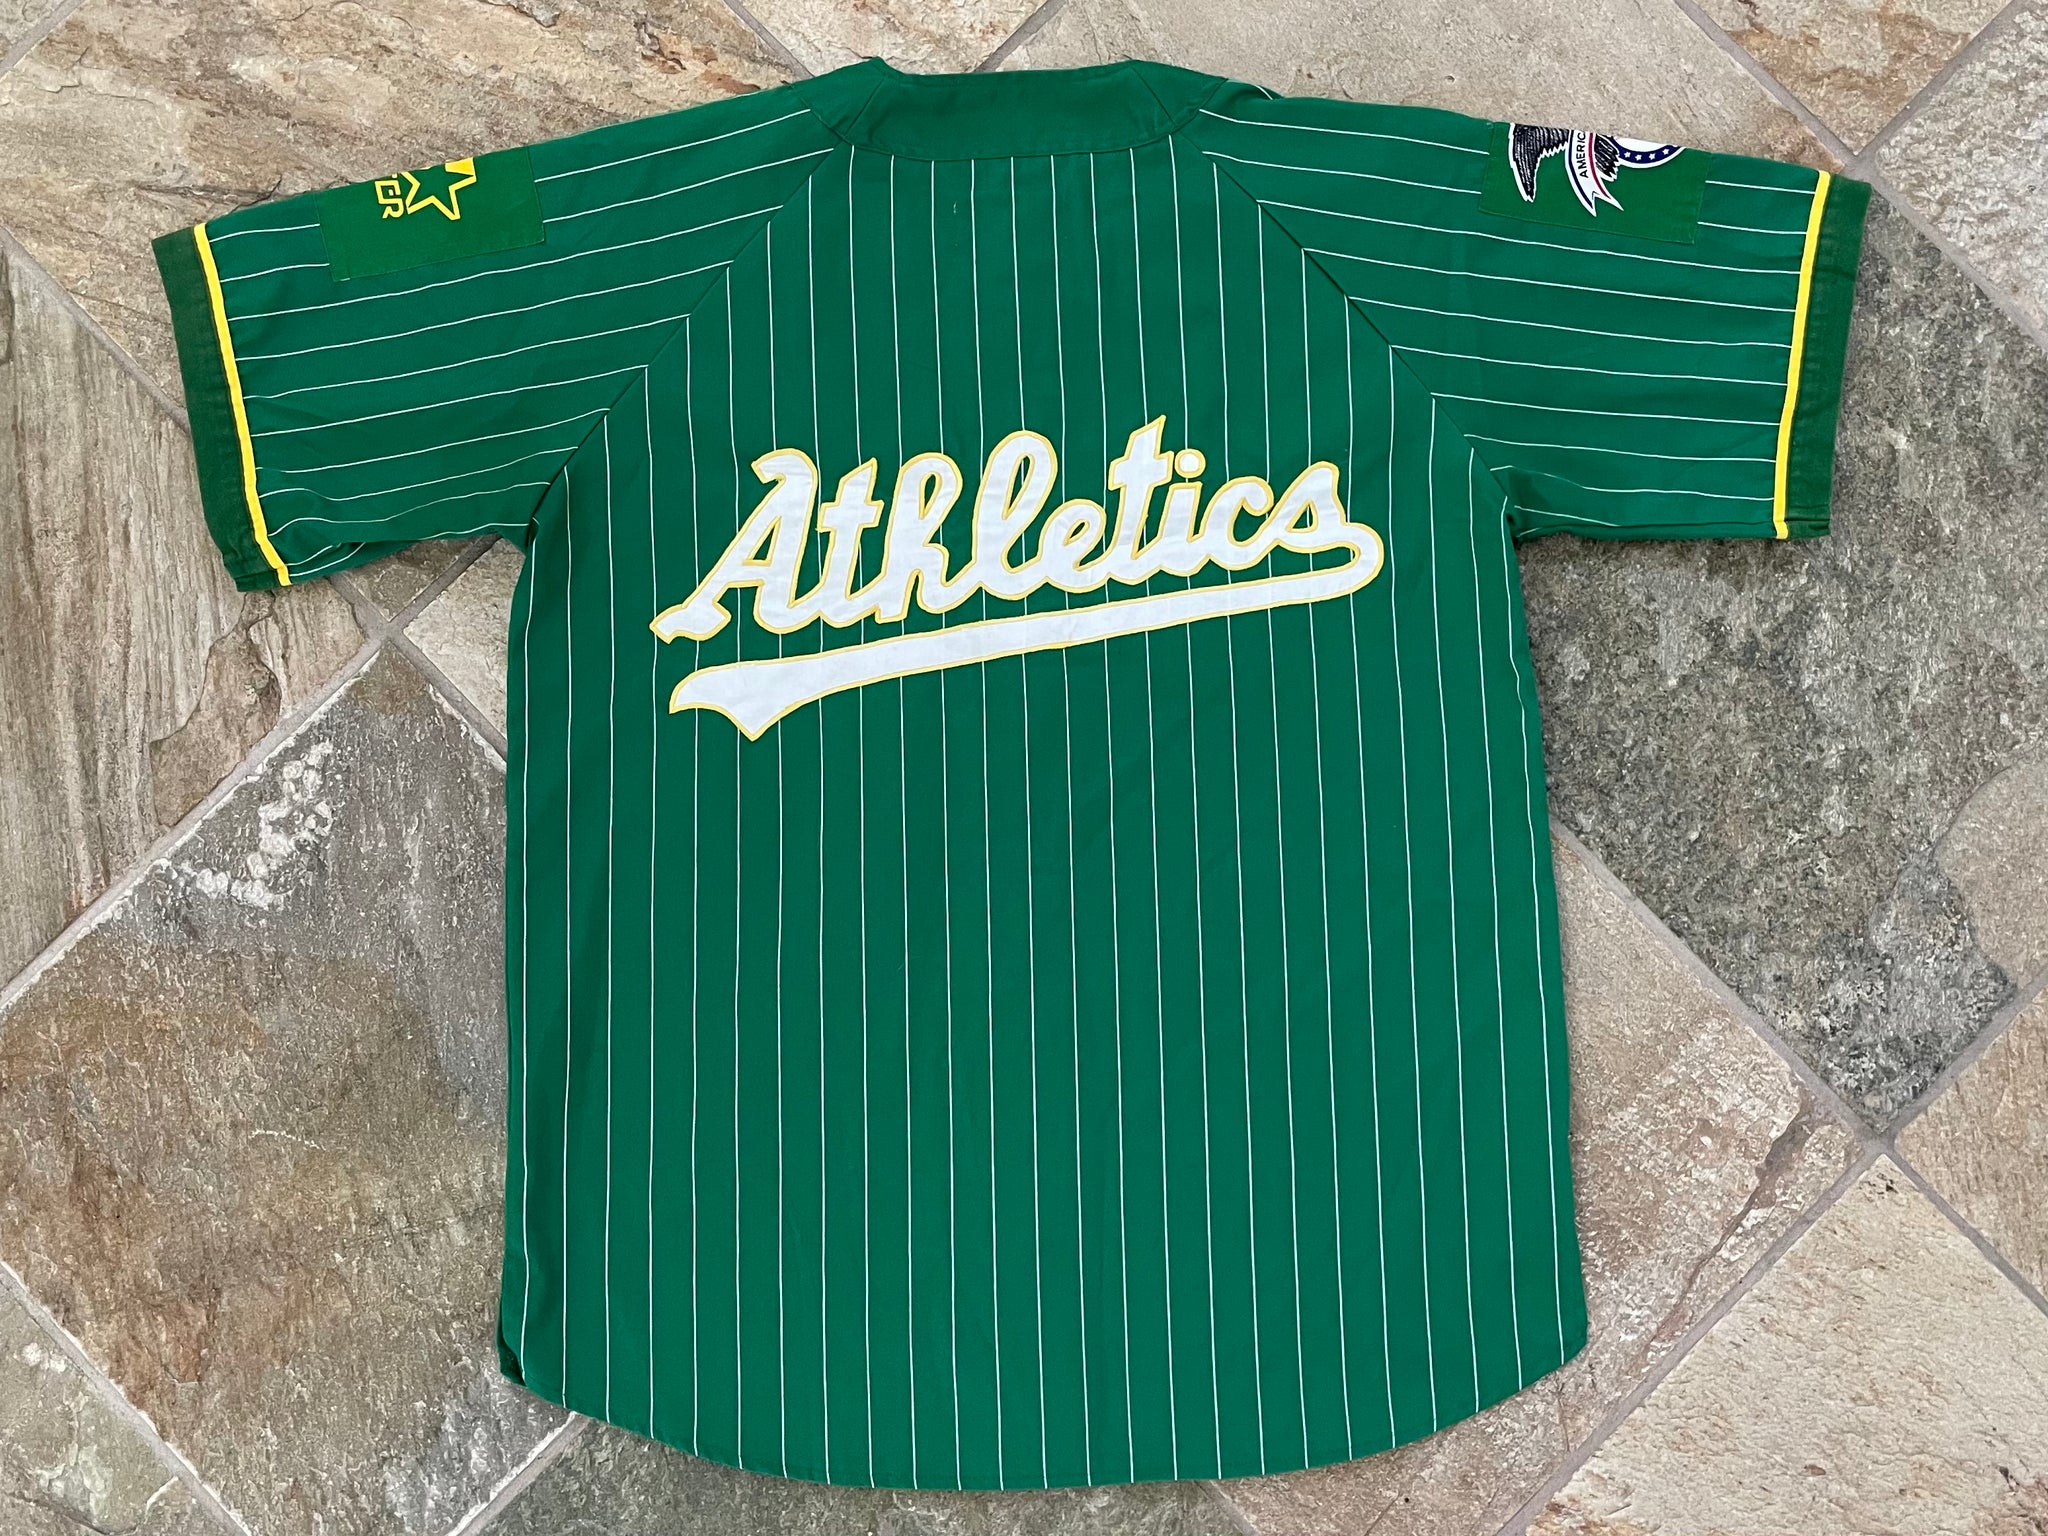 Rare Vintage 90s Oakland Athletics Mlb Baseball Shirt 